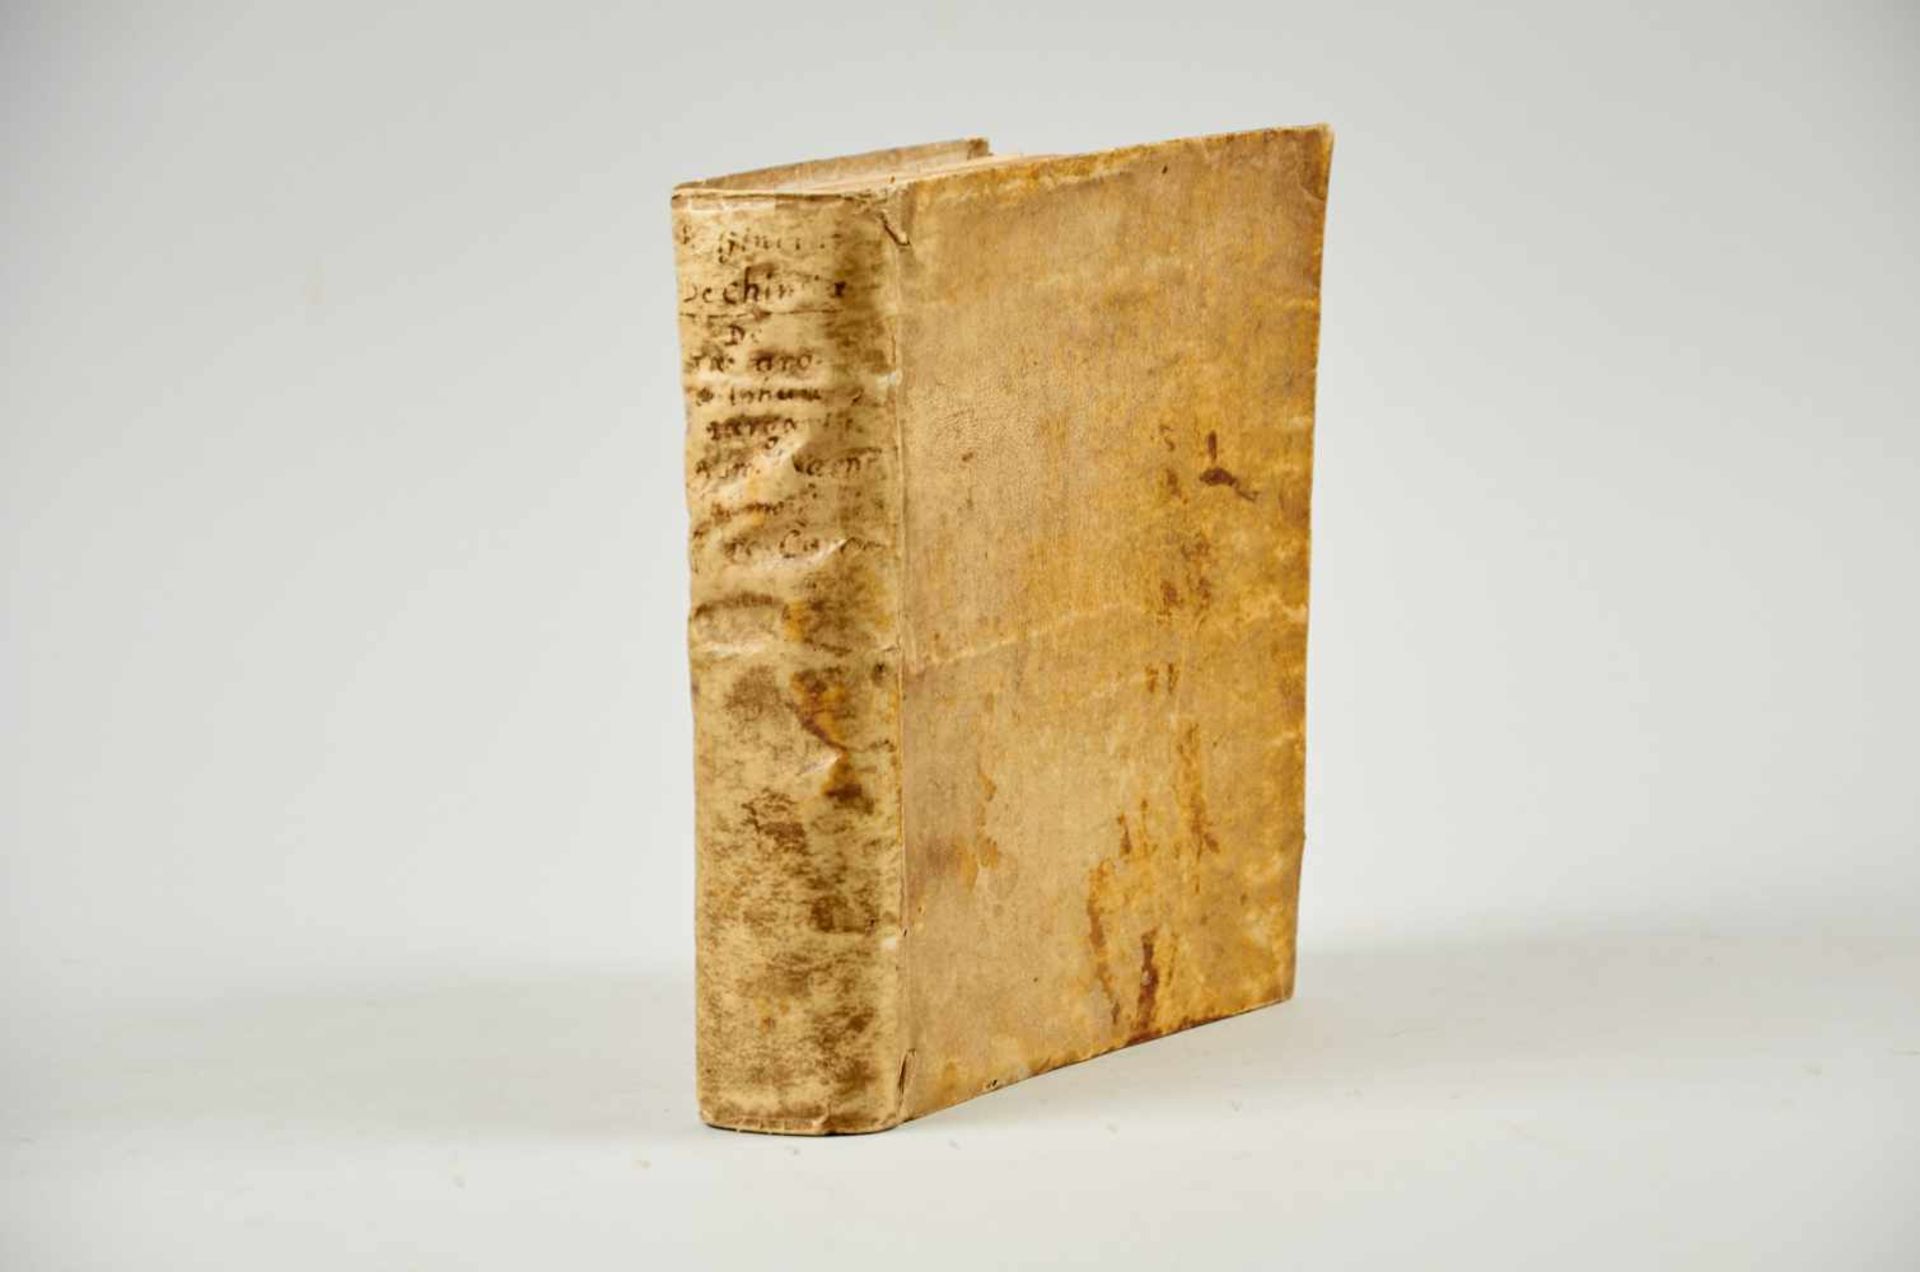 Rolfinck, W., Chimia in artis formam redacta, sex libriscomprehensa. Jena, Krebs, 1661. 4°. Mit